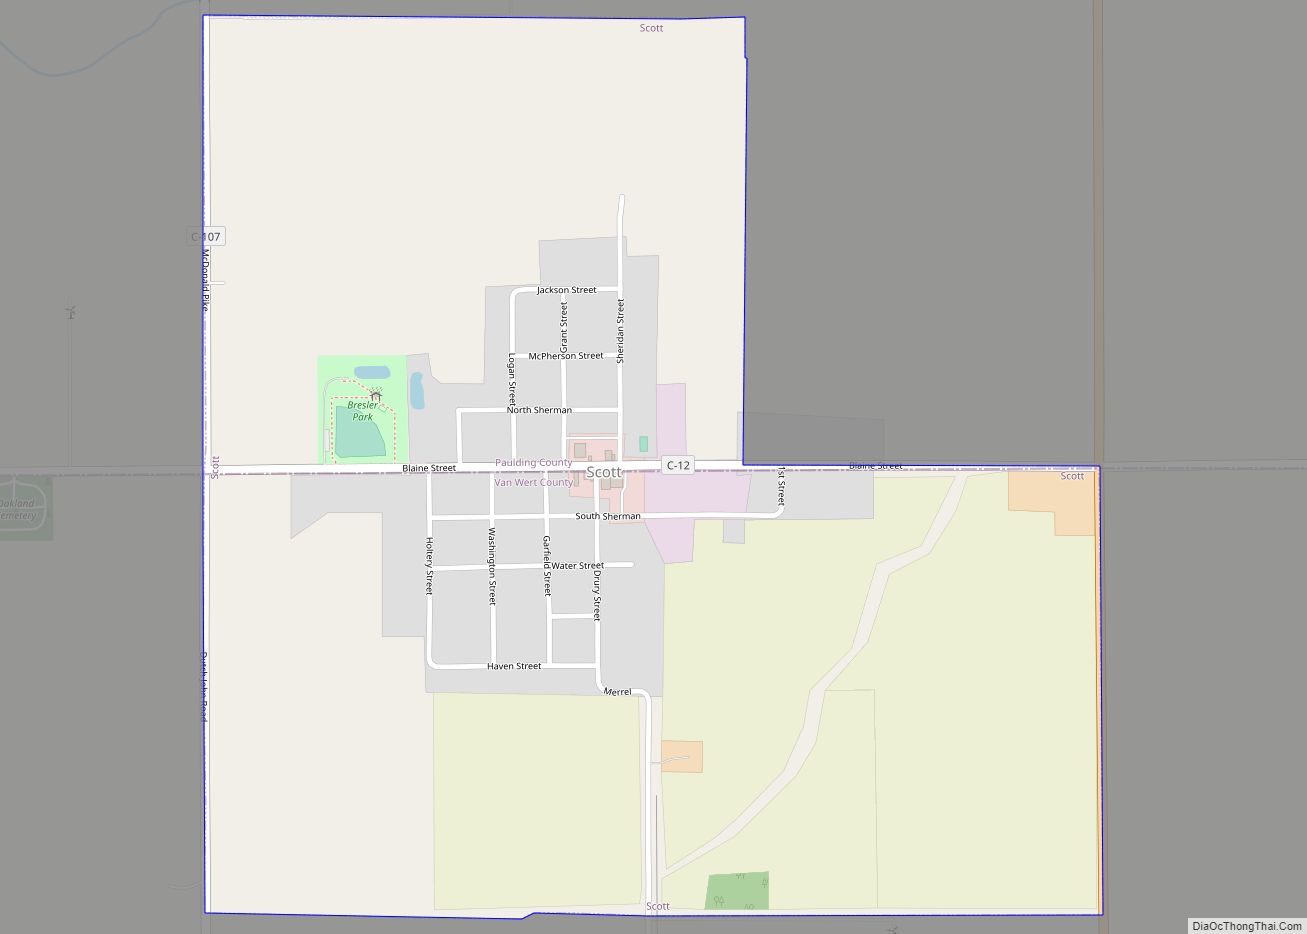 Map of Scott village, Ohio